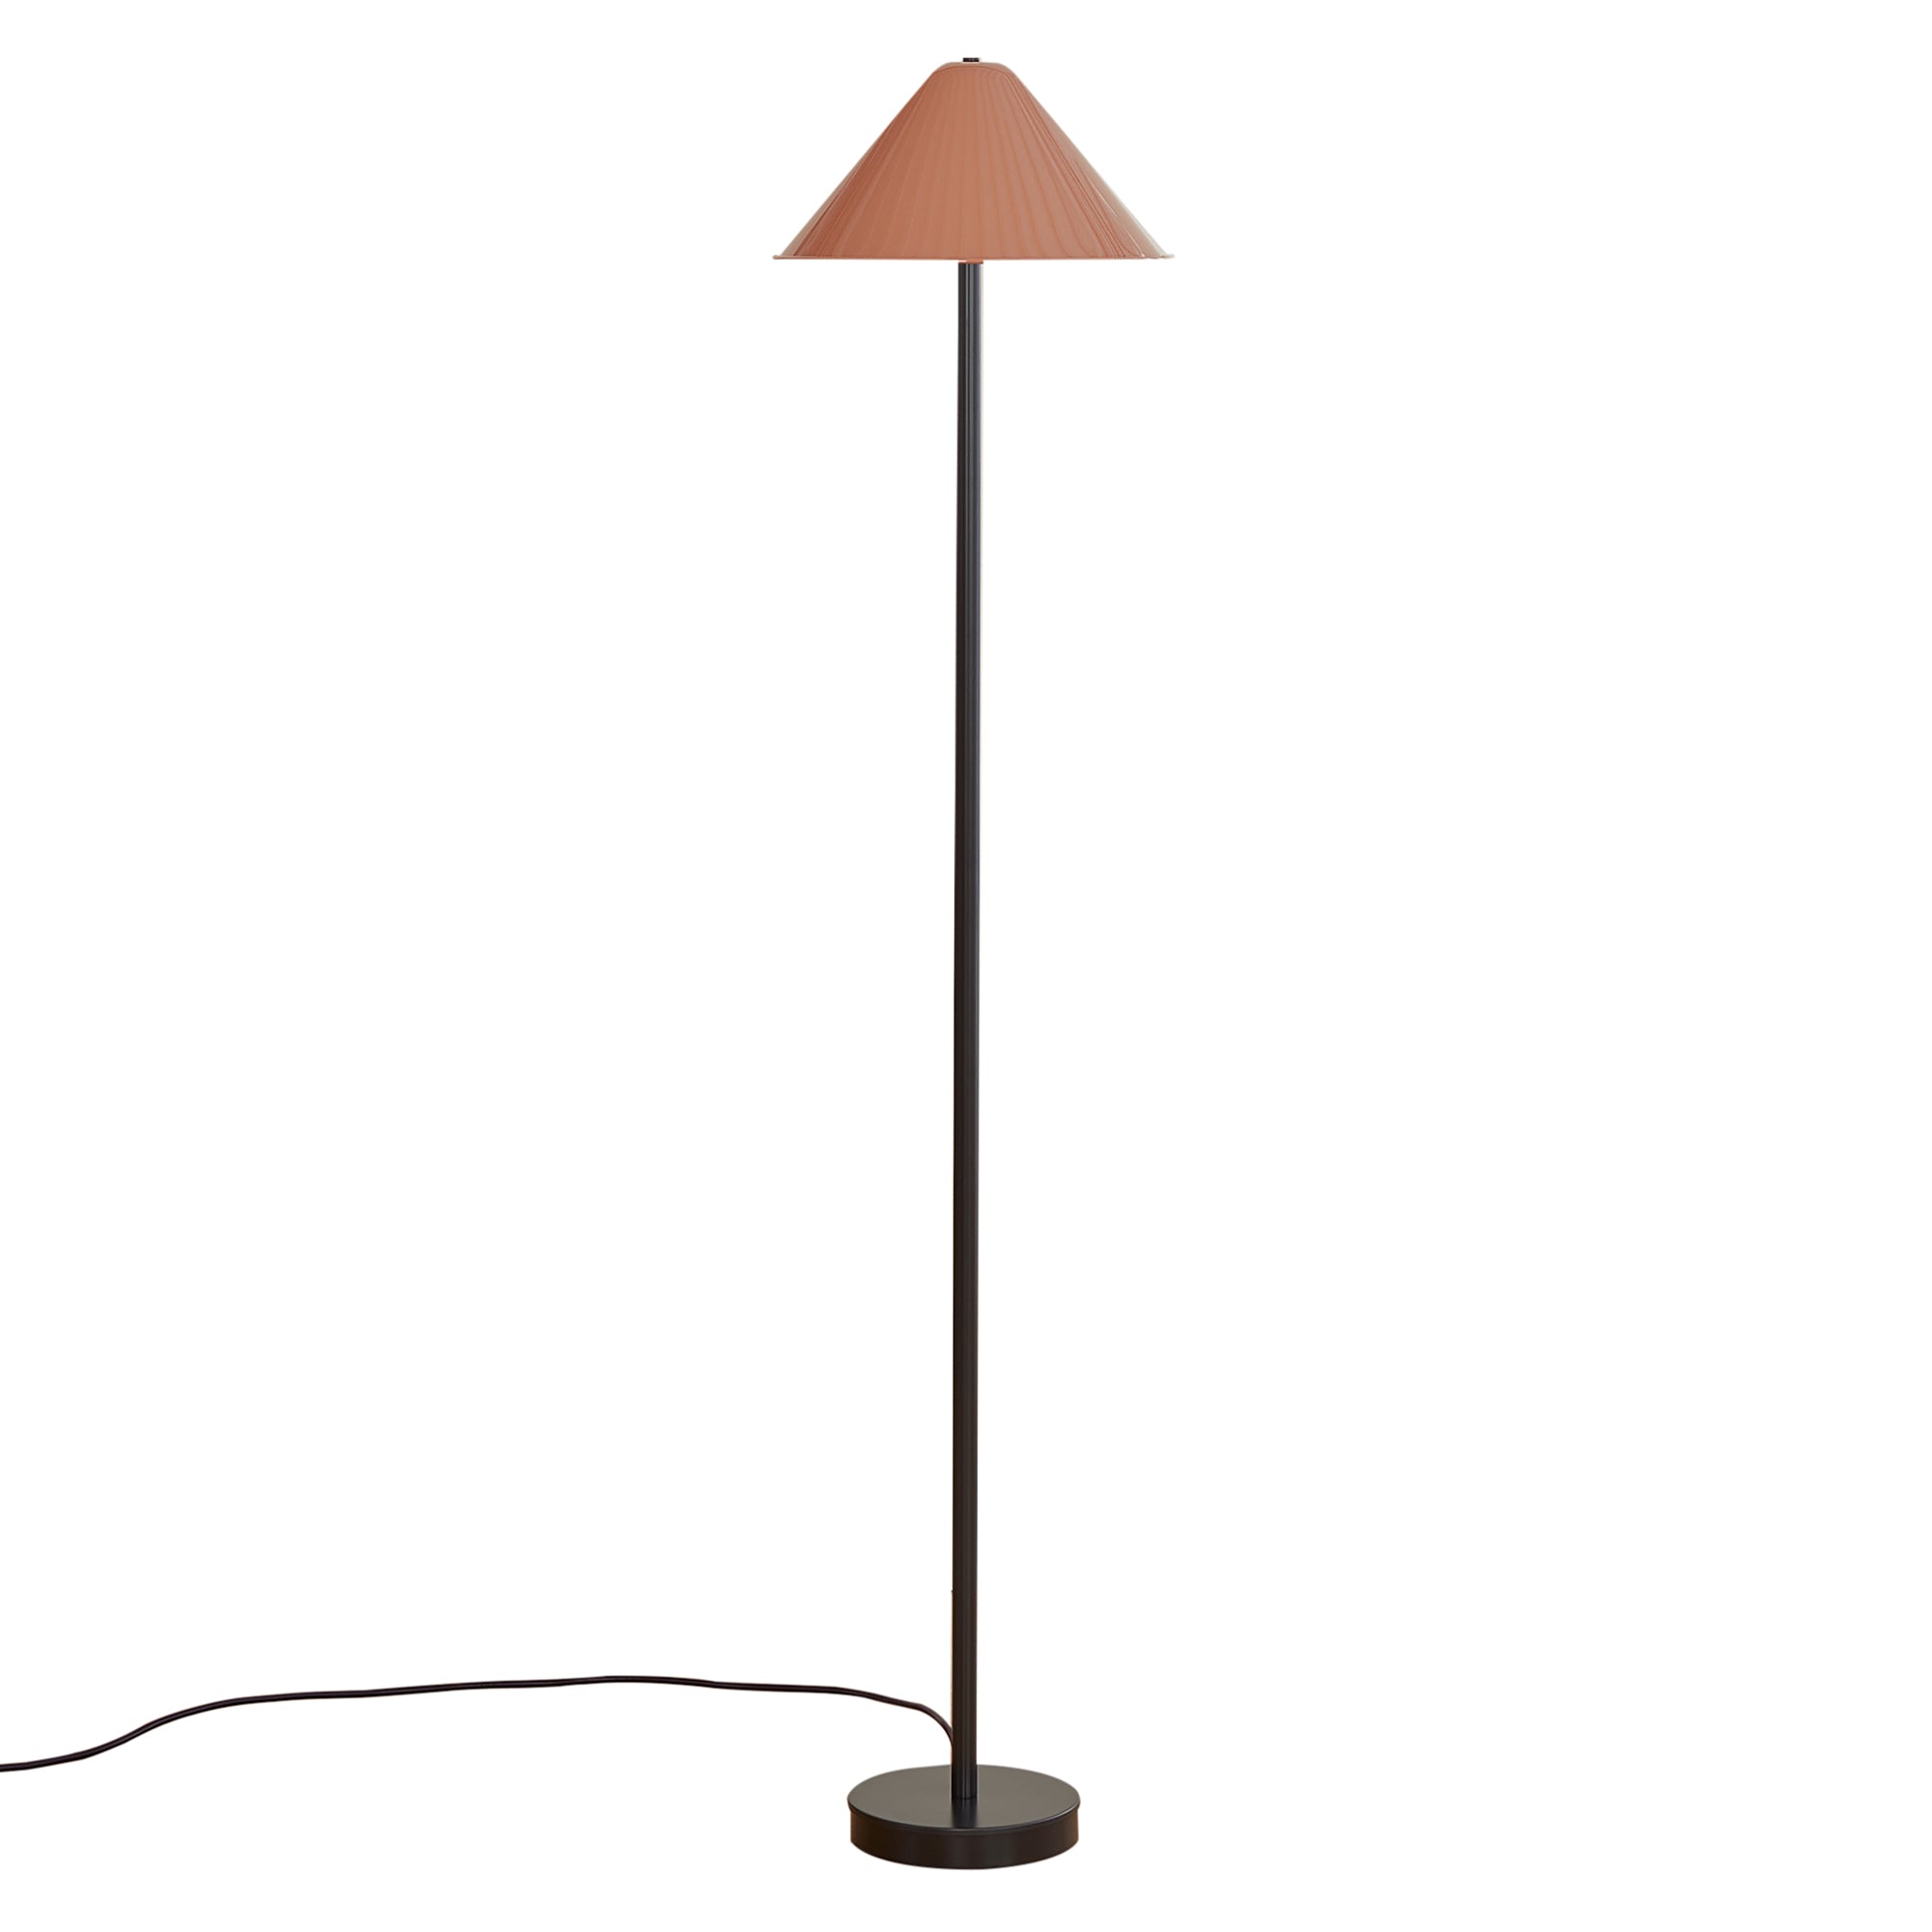 Tipi Floor Lamp: Peach + Black